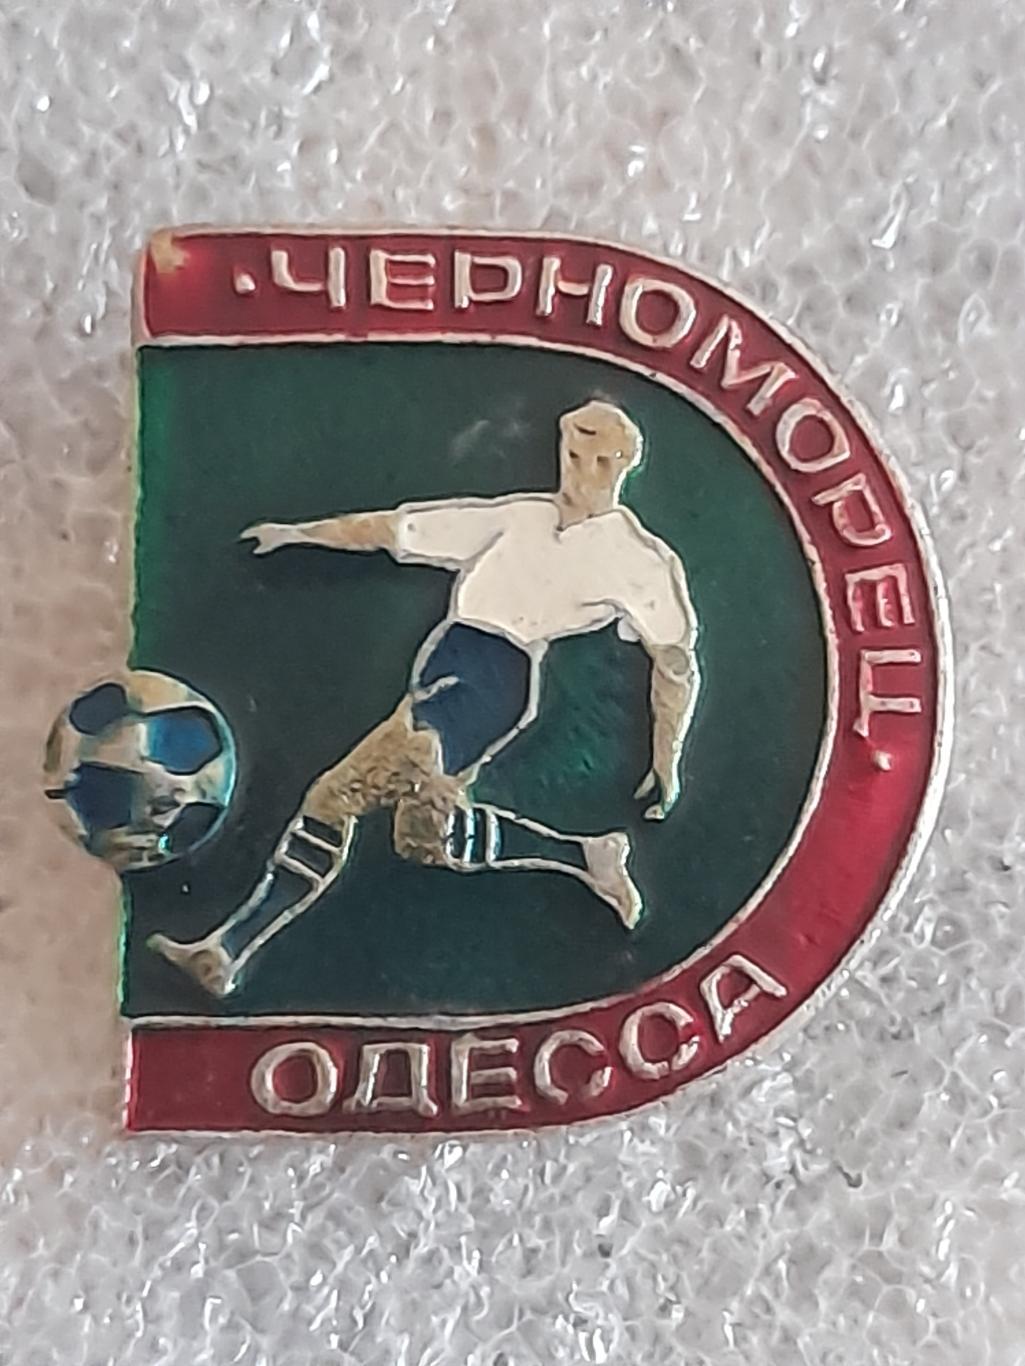 ФК Черноморец, Одесса(Украина) / FC Chernomorets, Odessa, Ukraine(5)